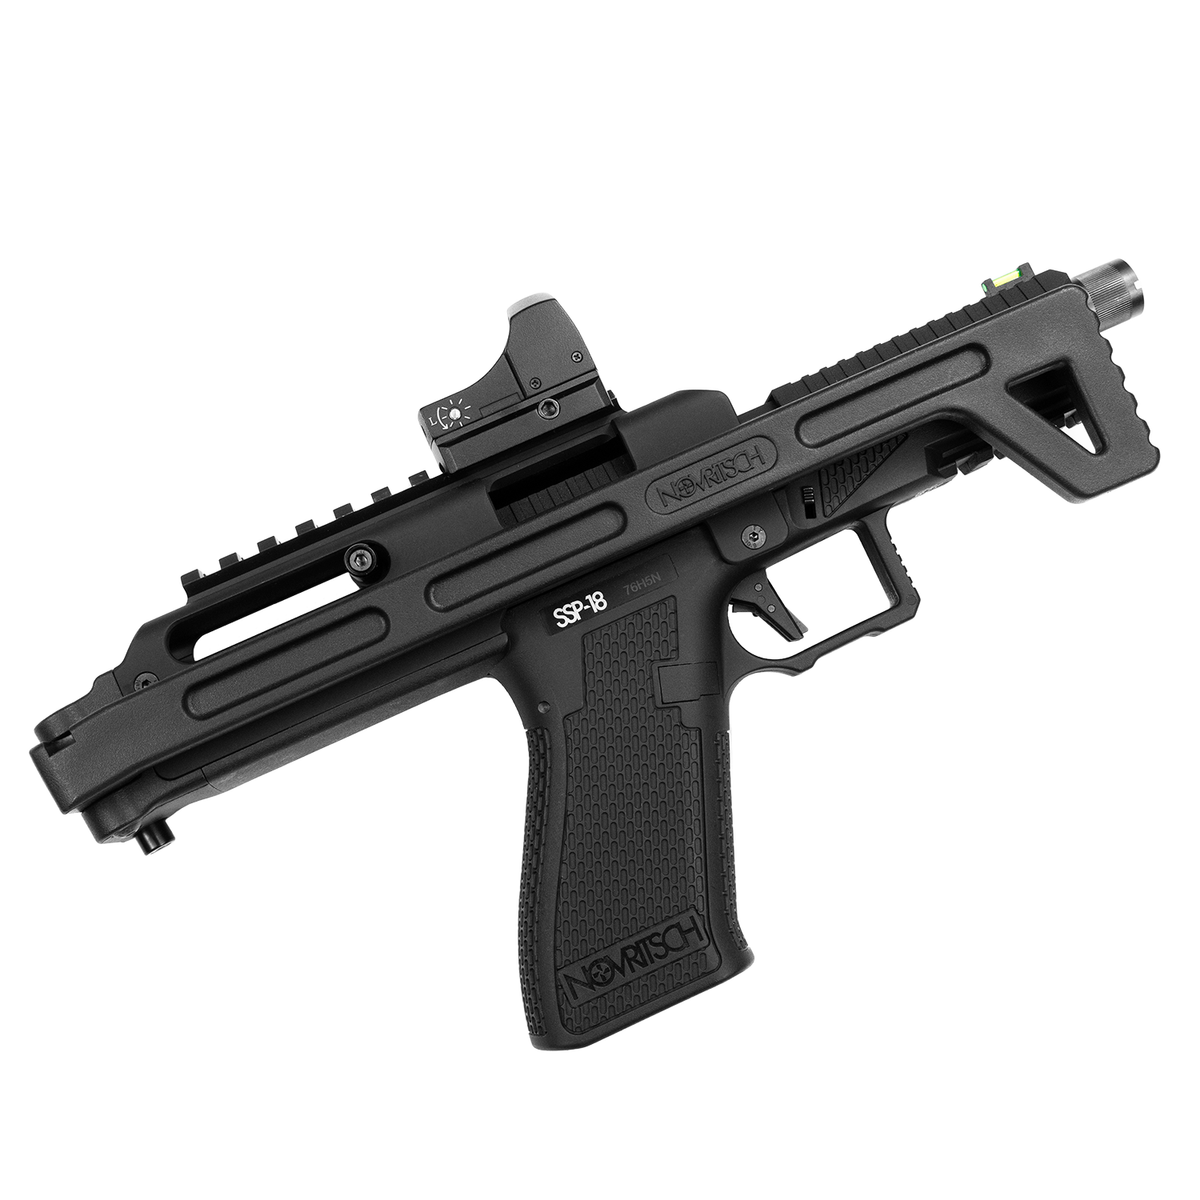 Novritsch SSP18 Minimal Carbine Kit